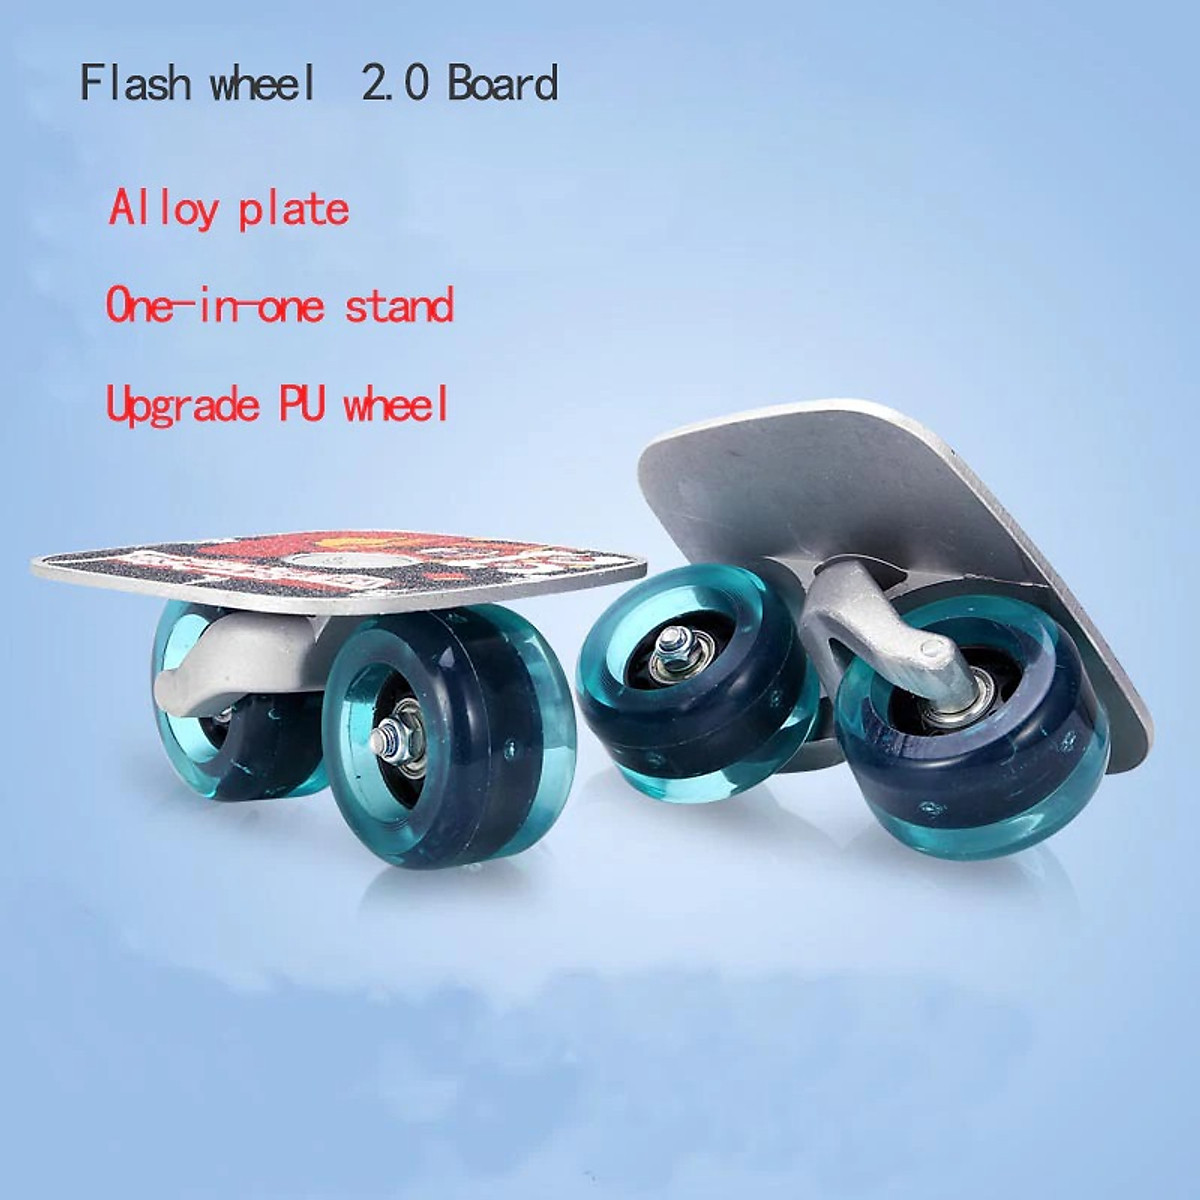 Ván trượt hợp kim nhôm có LED Flash wheel 2.0 Board Freeline Skate- Cao cấp